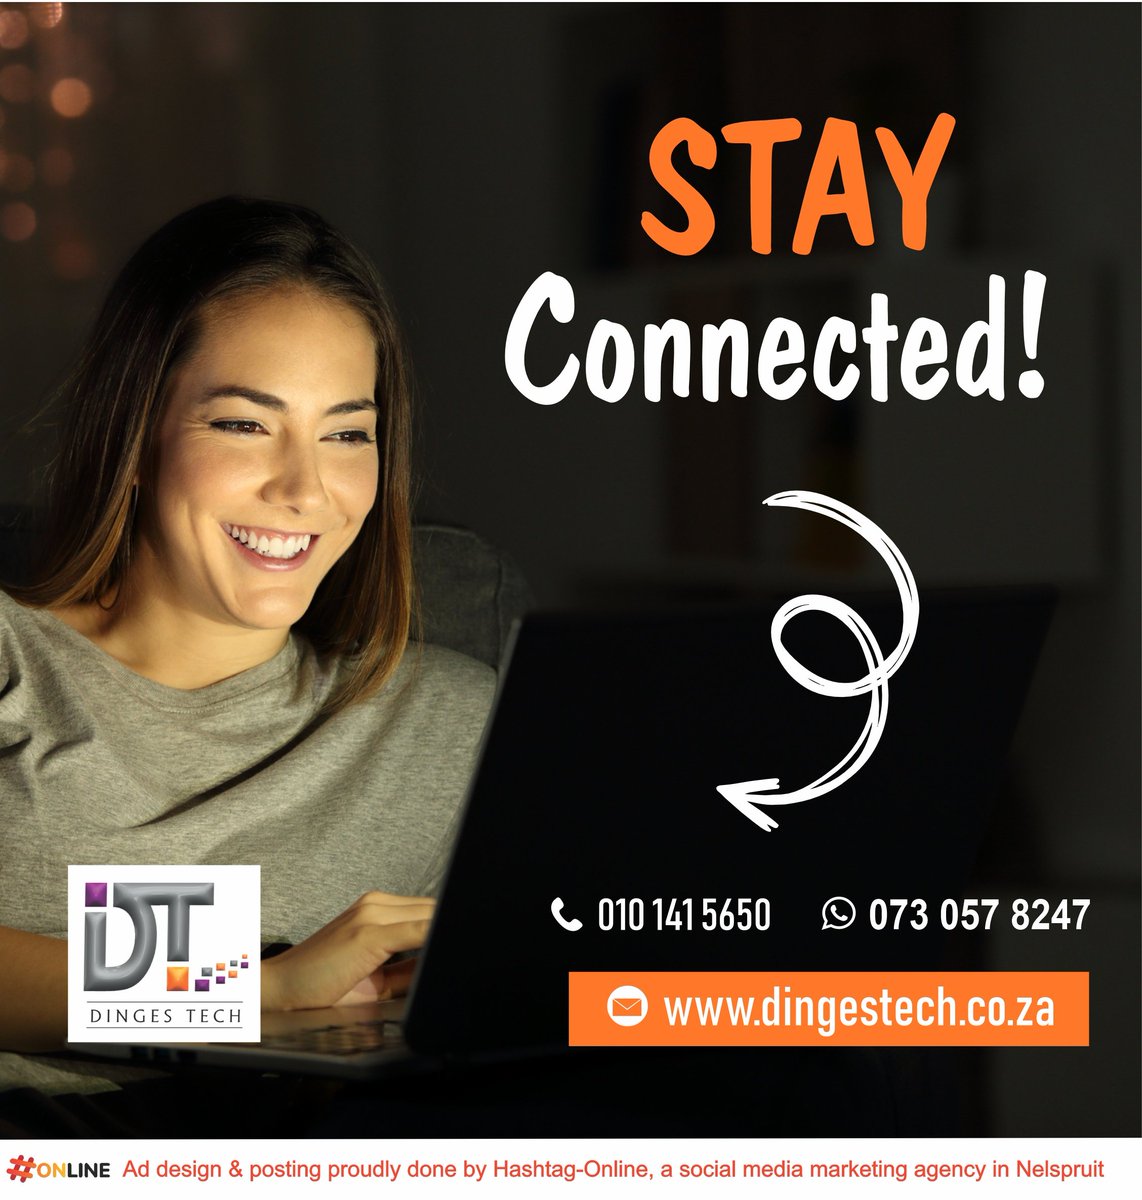 At DingesTech, we strive to keep you connected to the outside world 24/7.
Web: dingestech.co.za

#DingesTech #mpumalanga #nelspruit #mbombela #Internet #VOIP #webhosting #businessautomation #fibre #internet #wirelessinternet #satelliteinternet